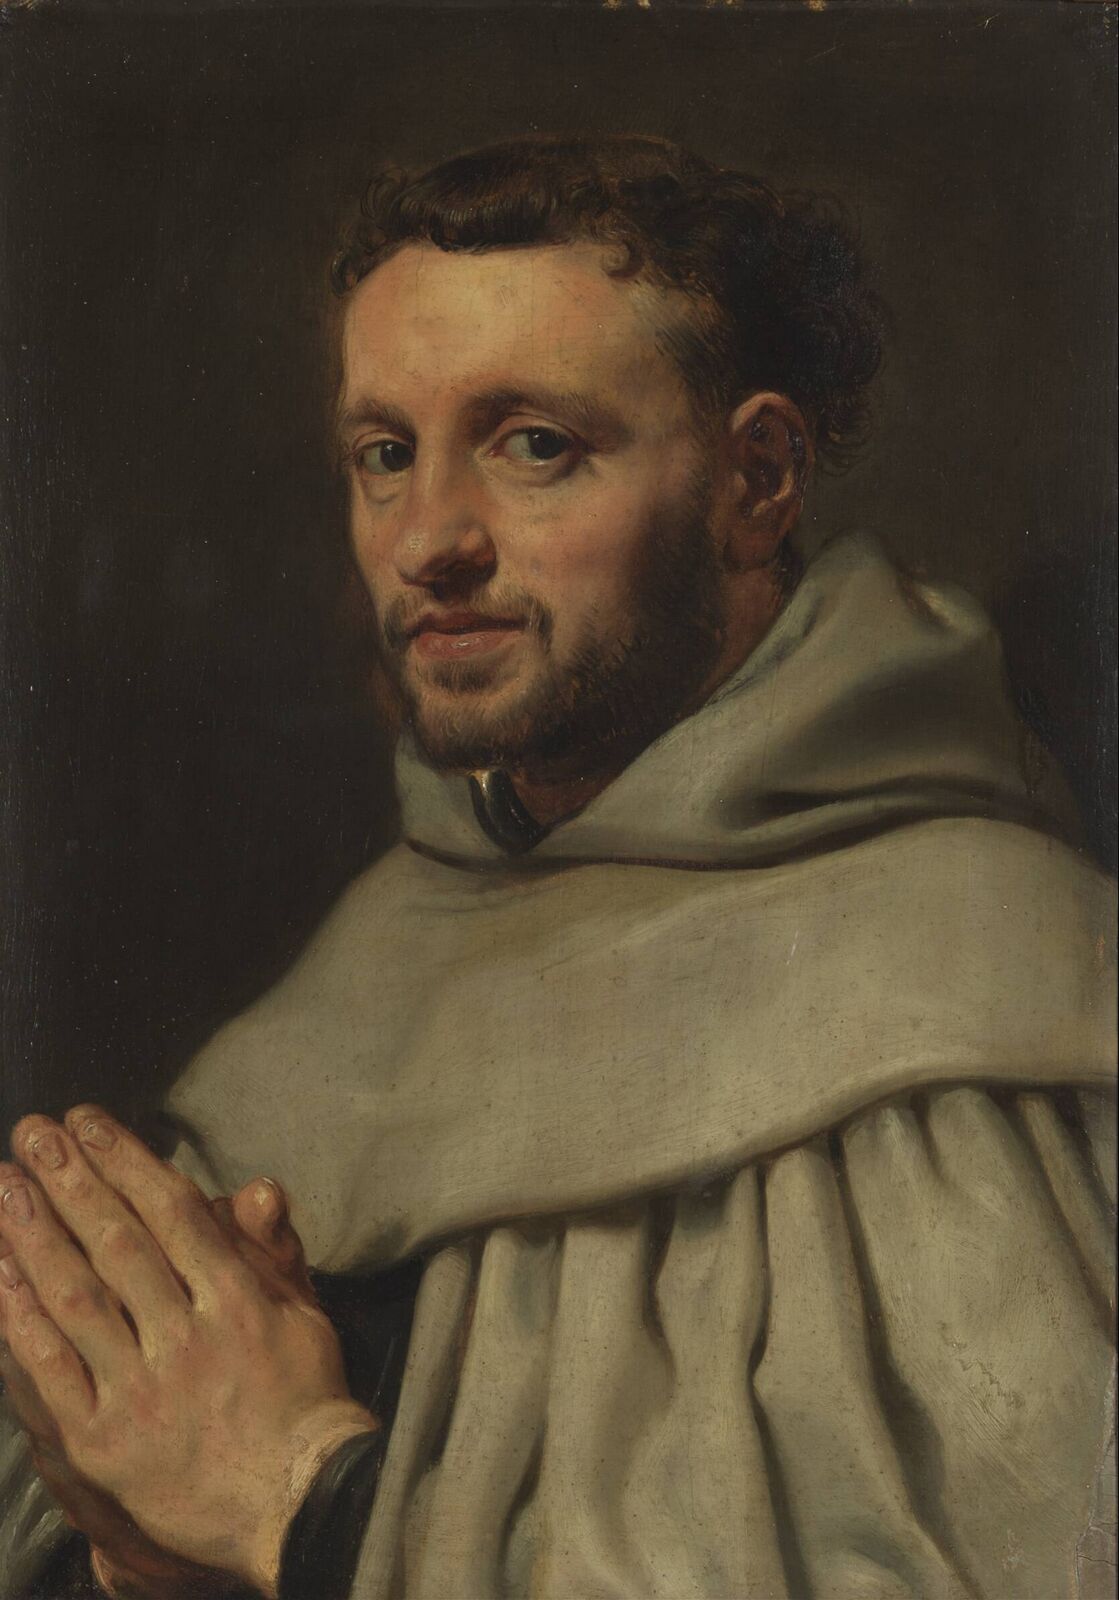 Peter+Paul+Rubens-1577-1640 (89).jpg